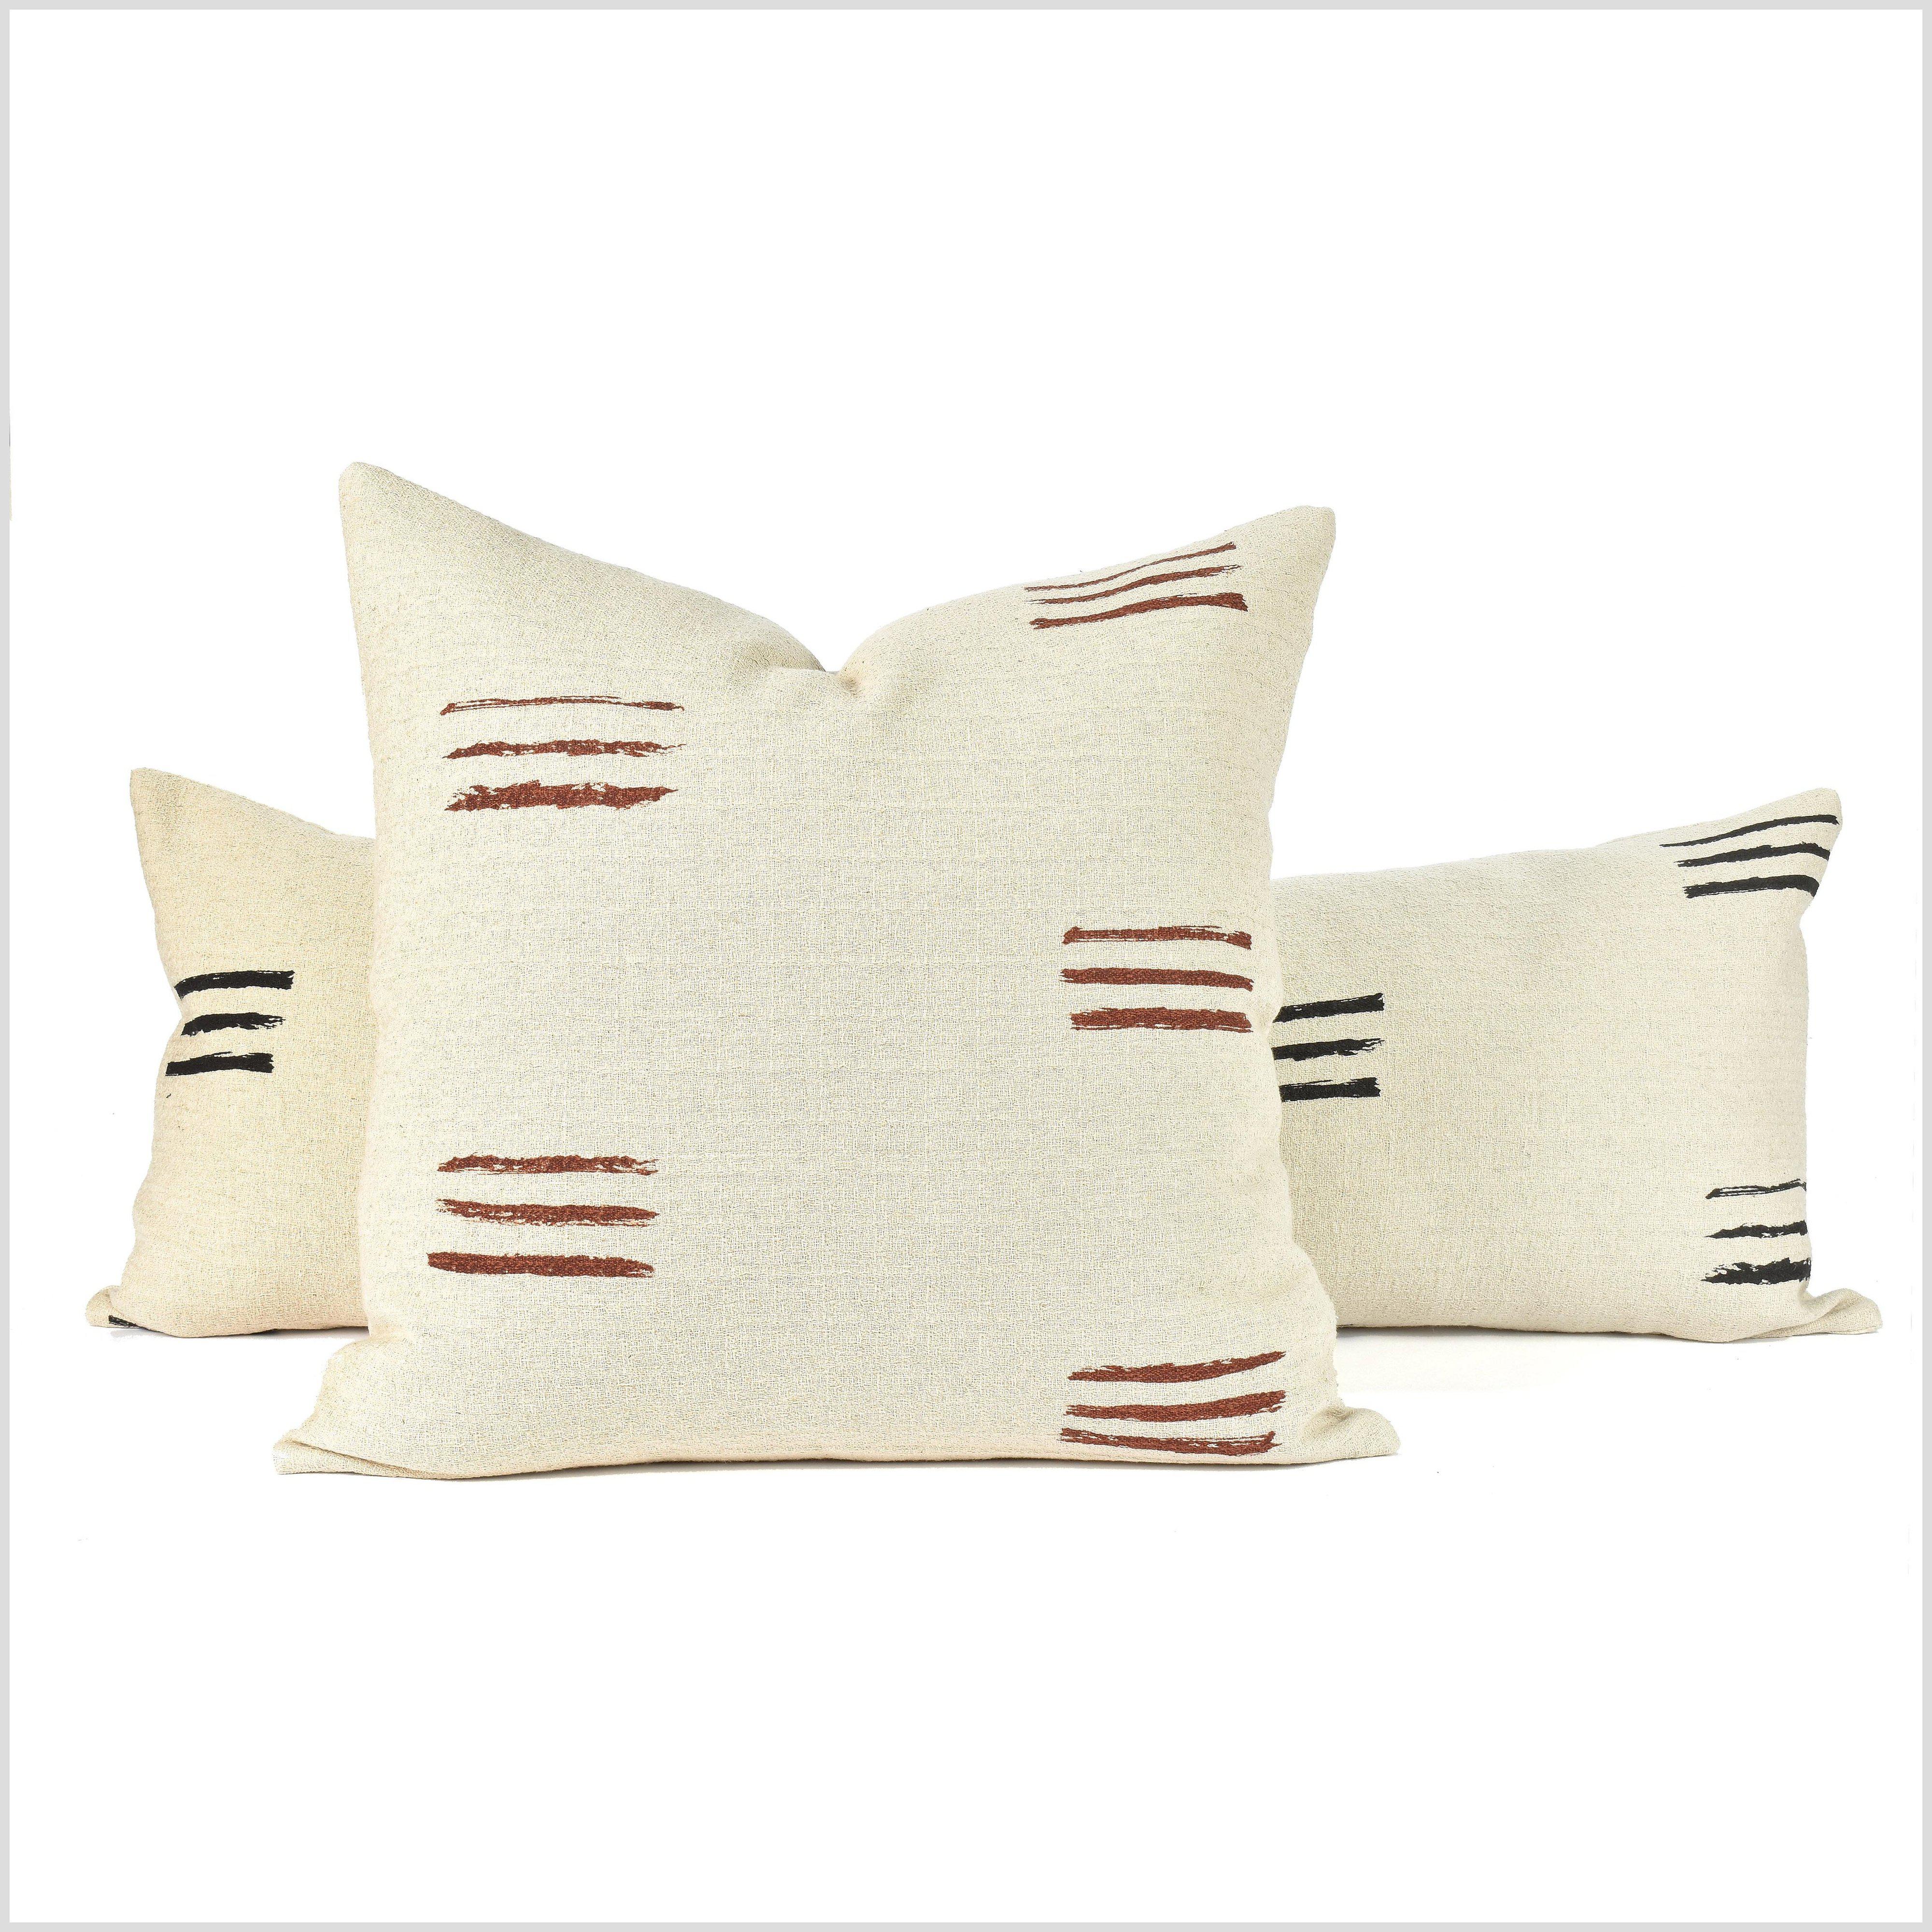 Neutral Boho Pillow Set Sofa Pillow Set White Mud Cloth Decor Textured  Pillow Cover Set Lumbar Throw Pillow 